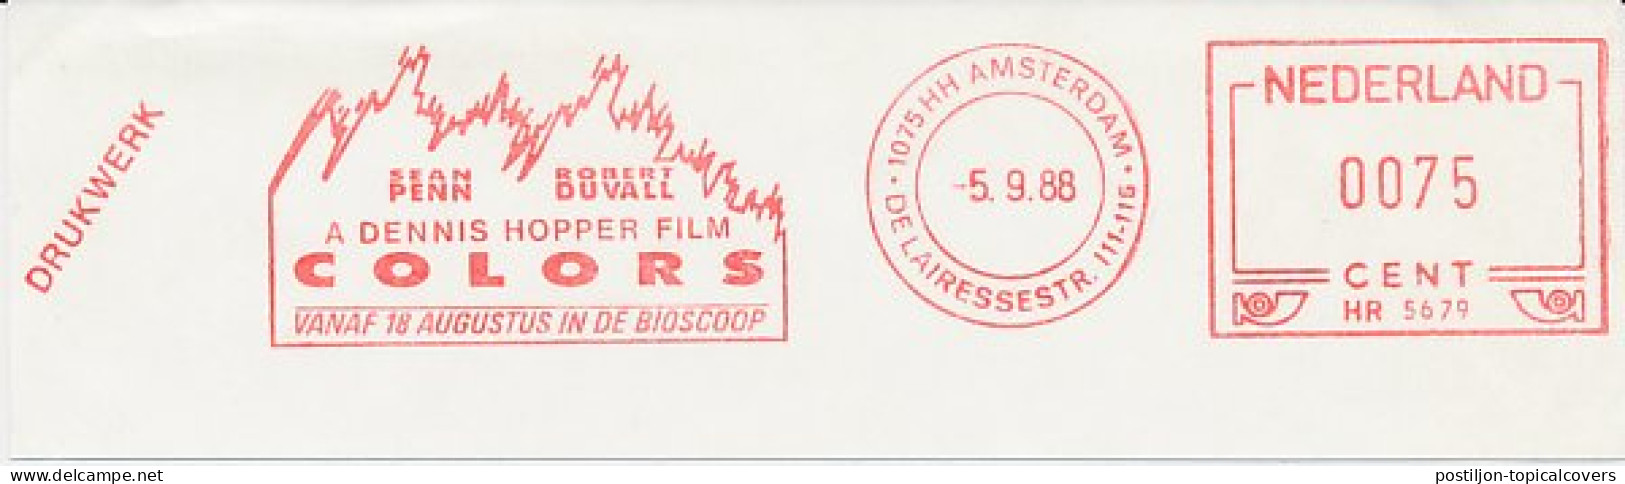 Meter Cut Netherlands 1988 Colors - Movie - Police - Film